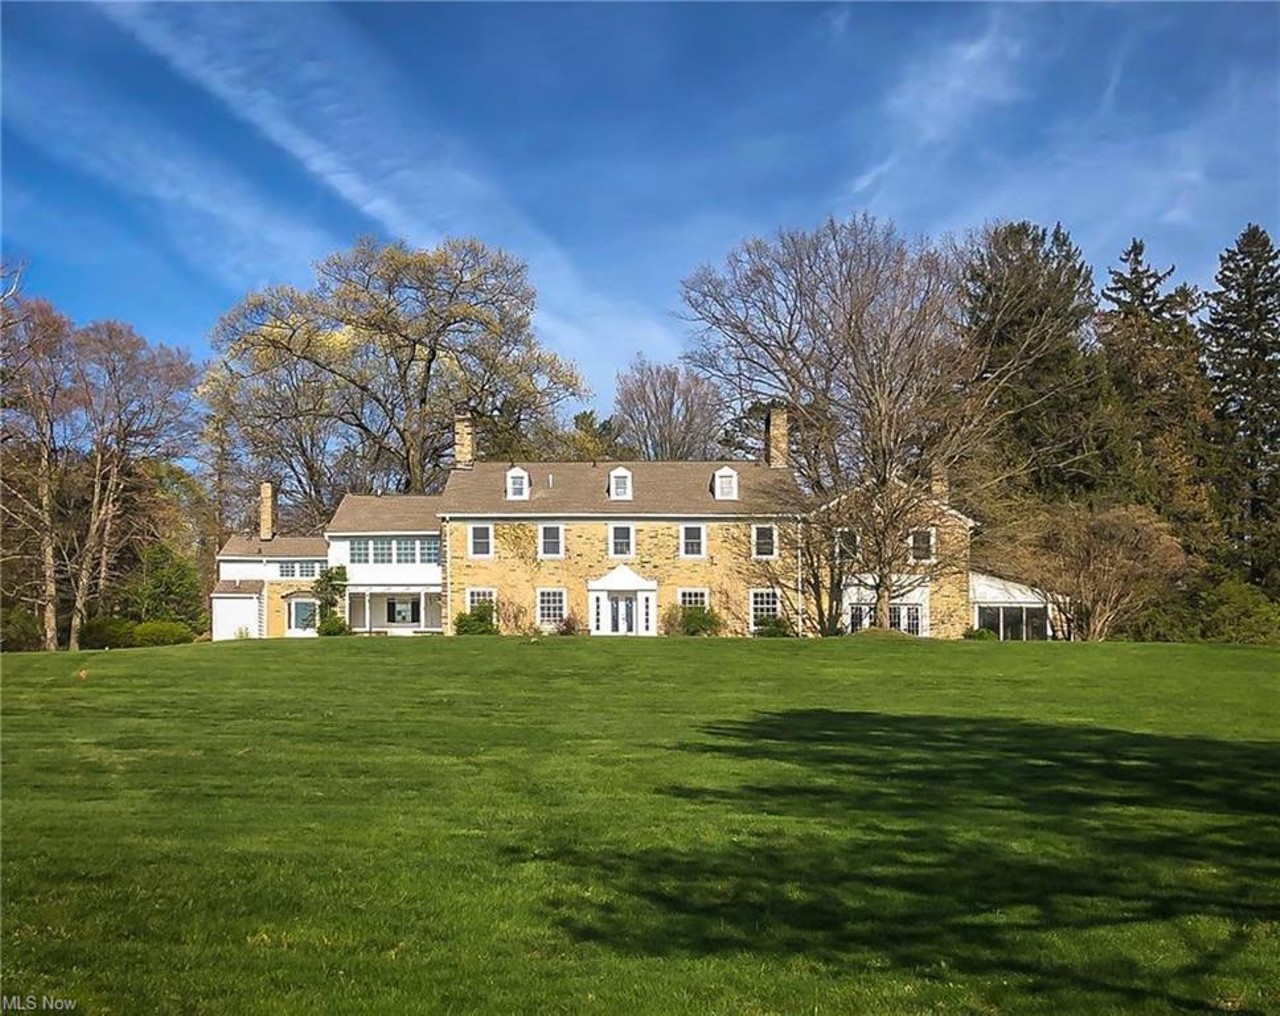 Roman Coppola's Gates Mills Mansion is Now on the Market for $2.9 Million